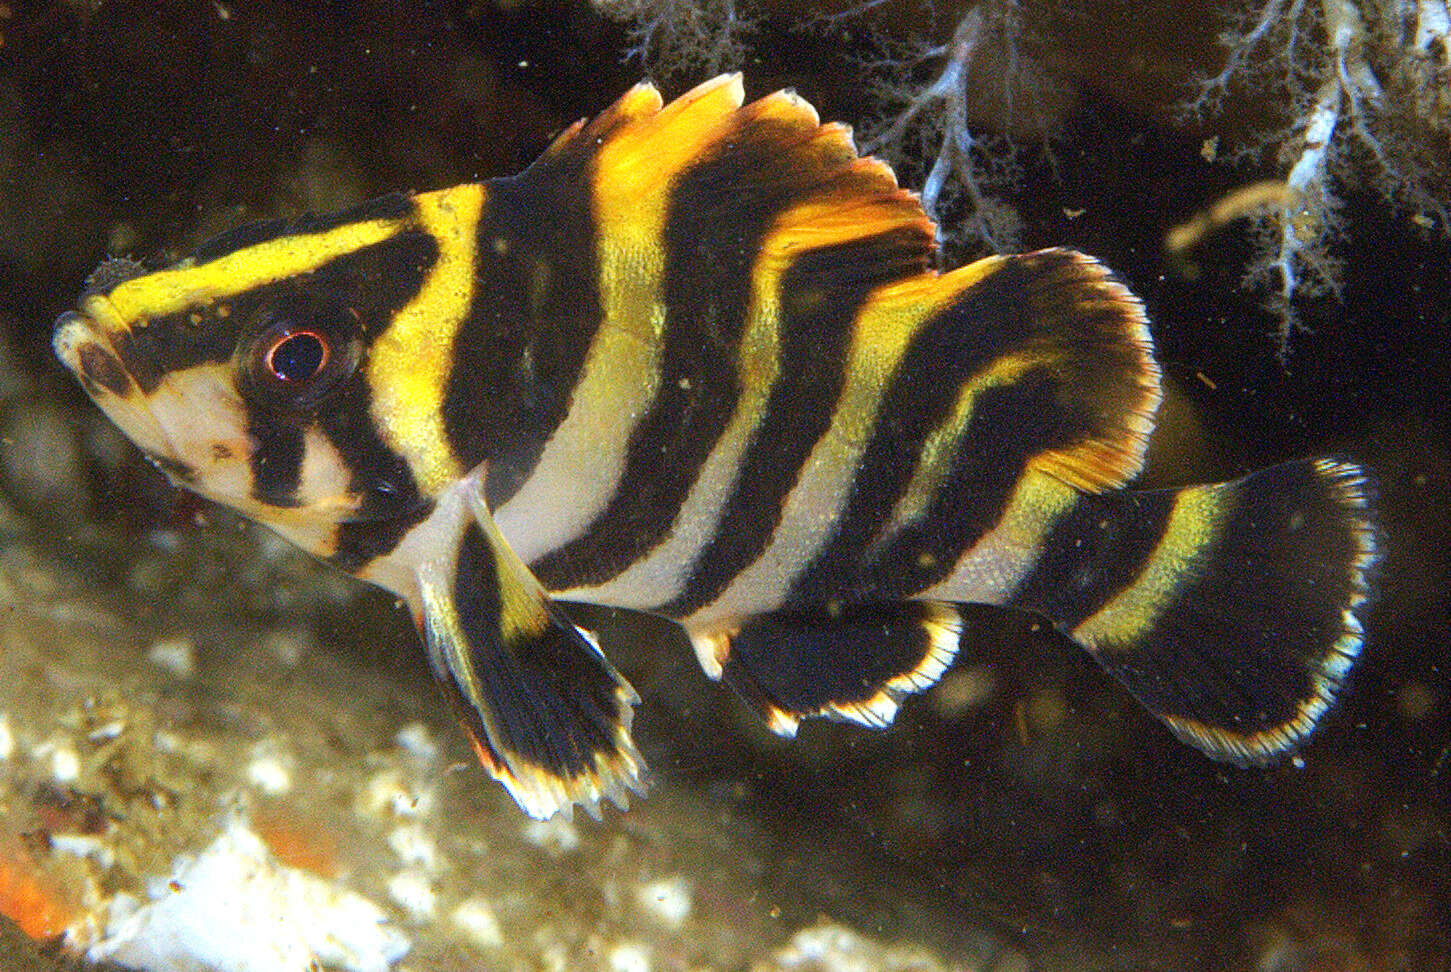 Image of Treefish